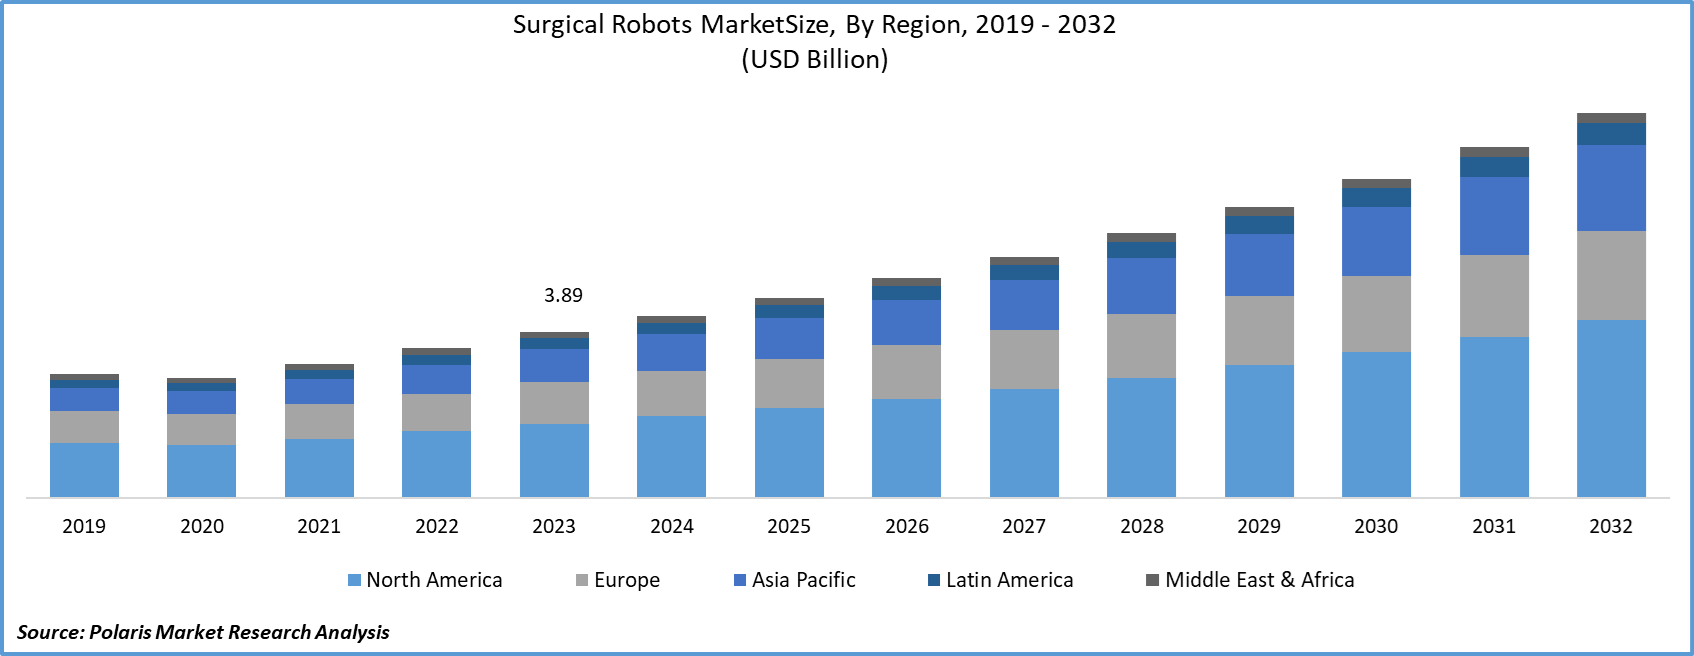 Surgical Robot Market Size